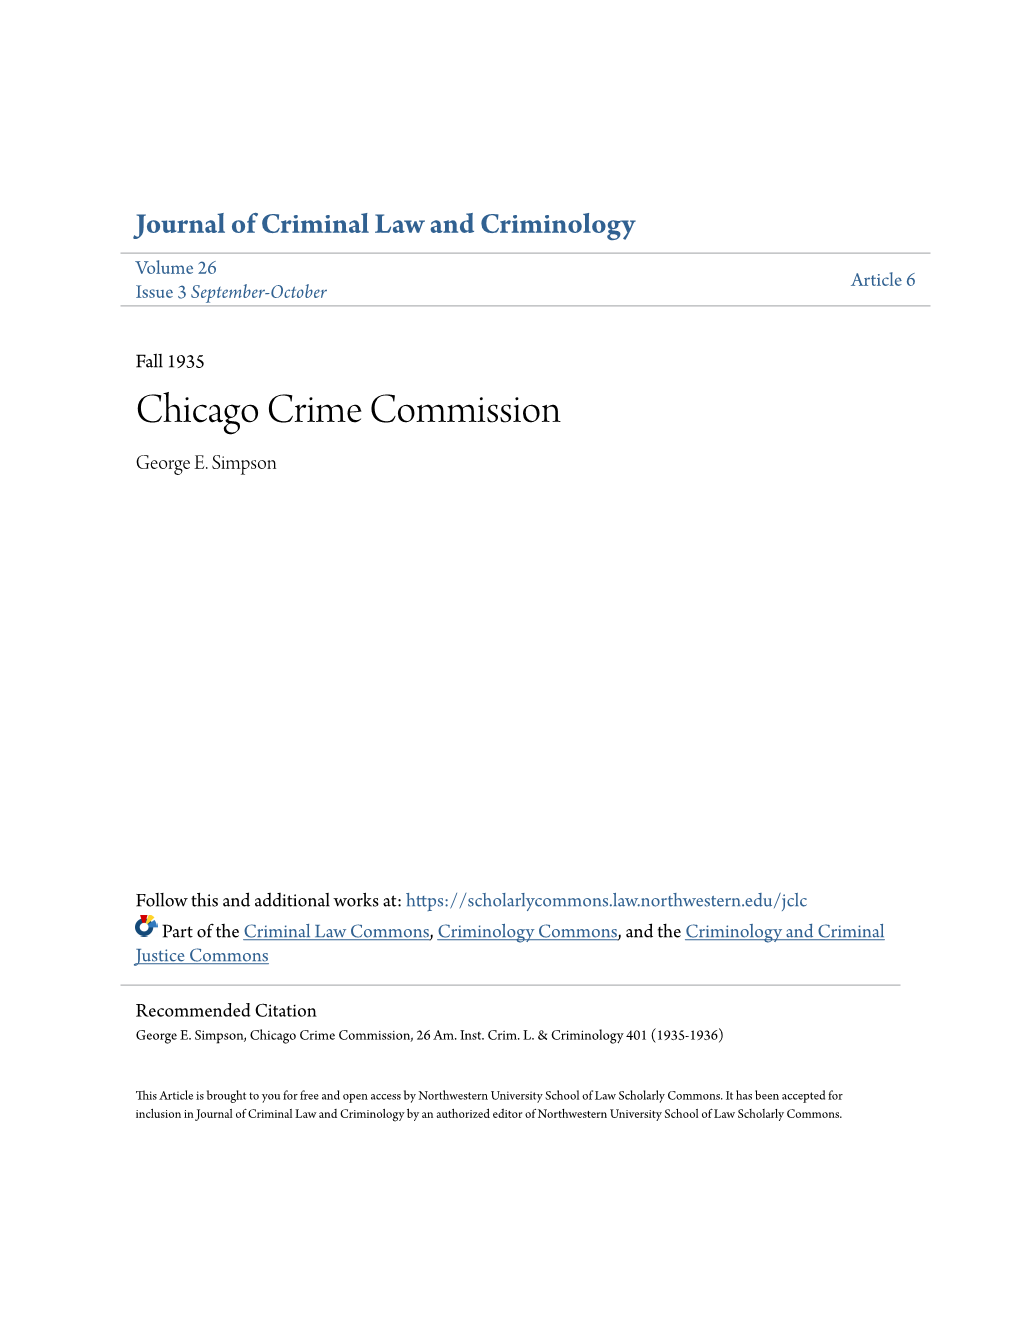 Chicago Crime Commission George E